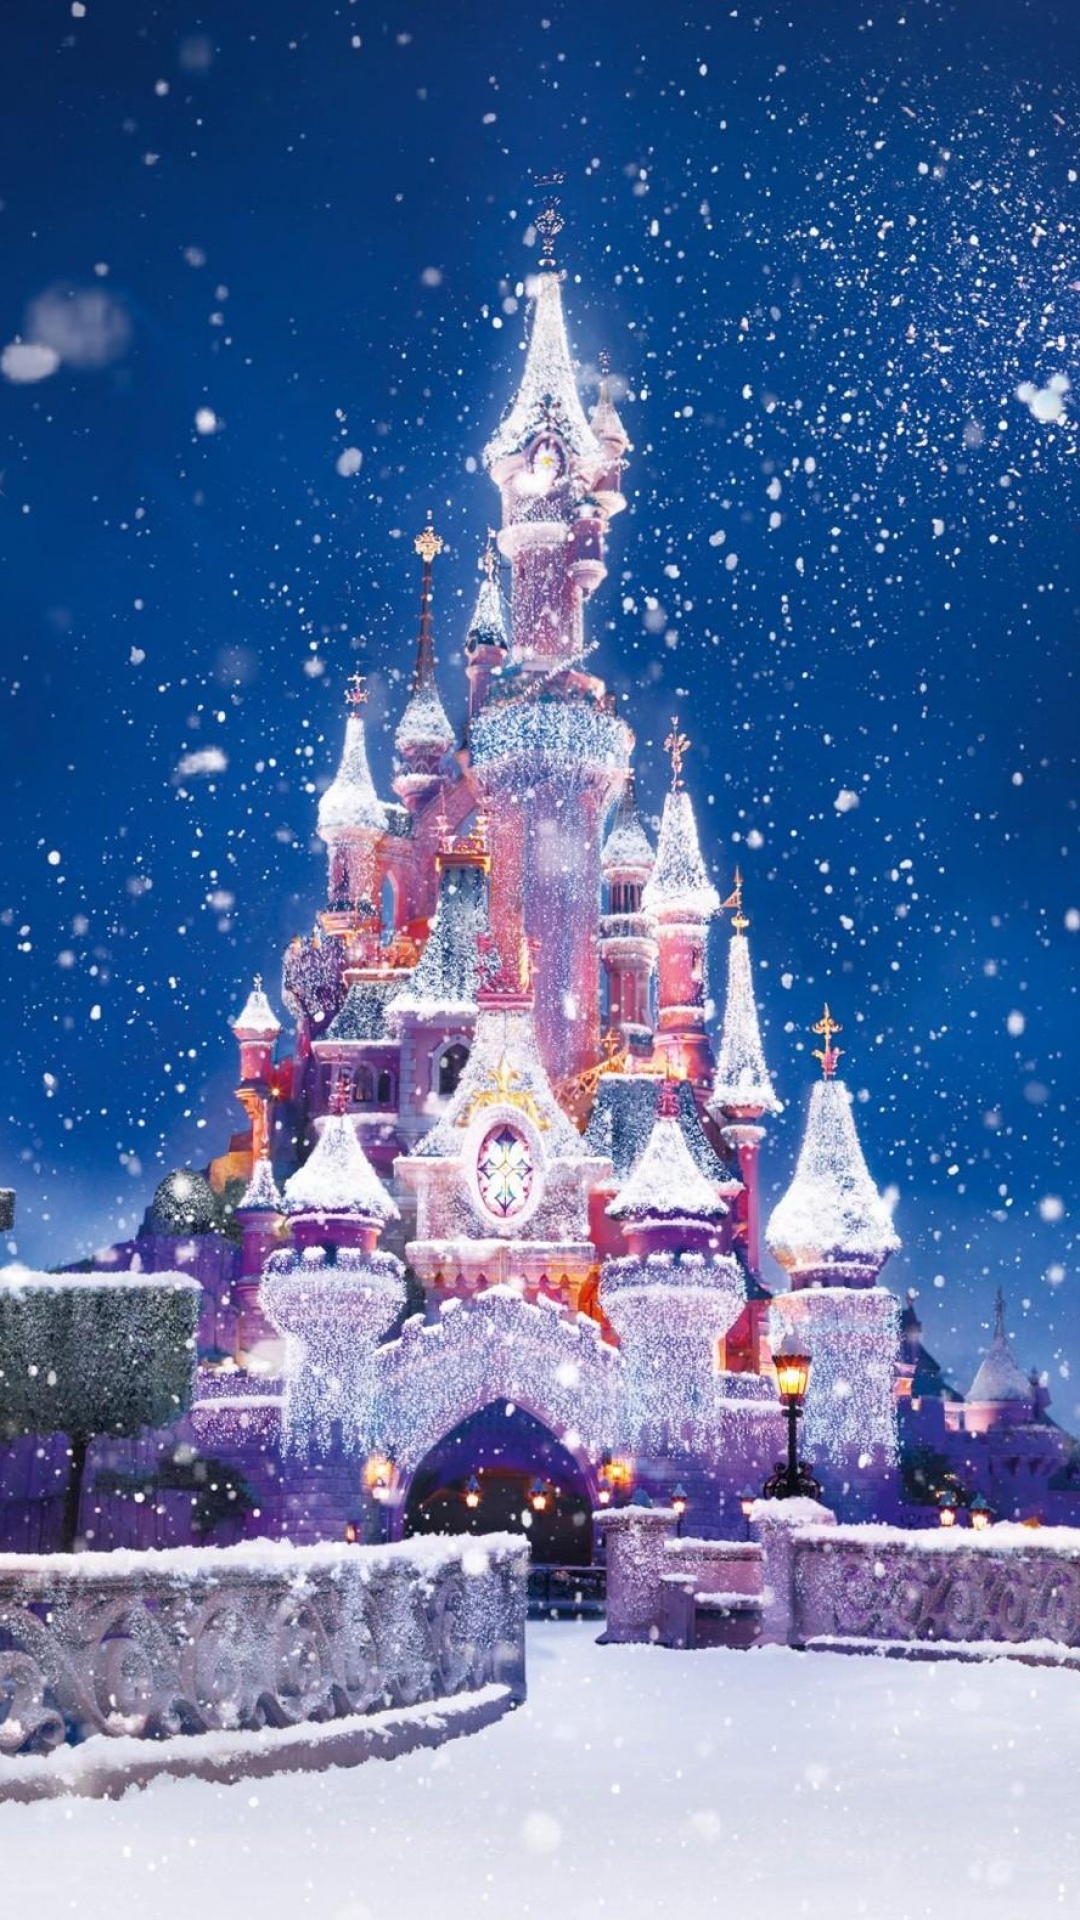 Disney Castle Christmas Lights Snow Android Wallpaper.jpg